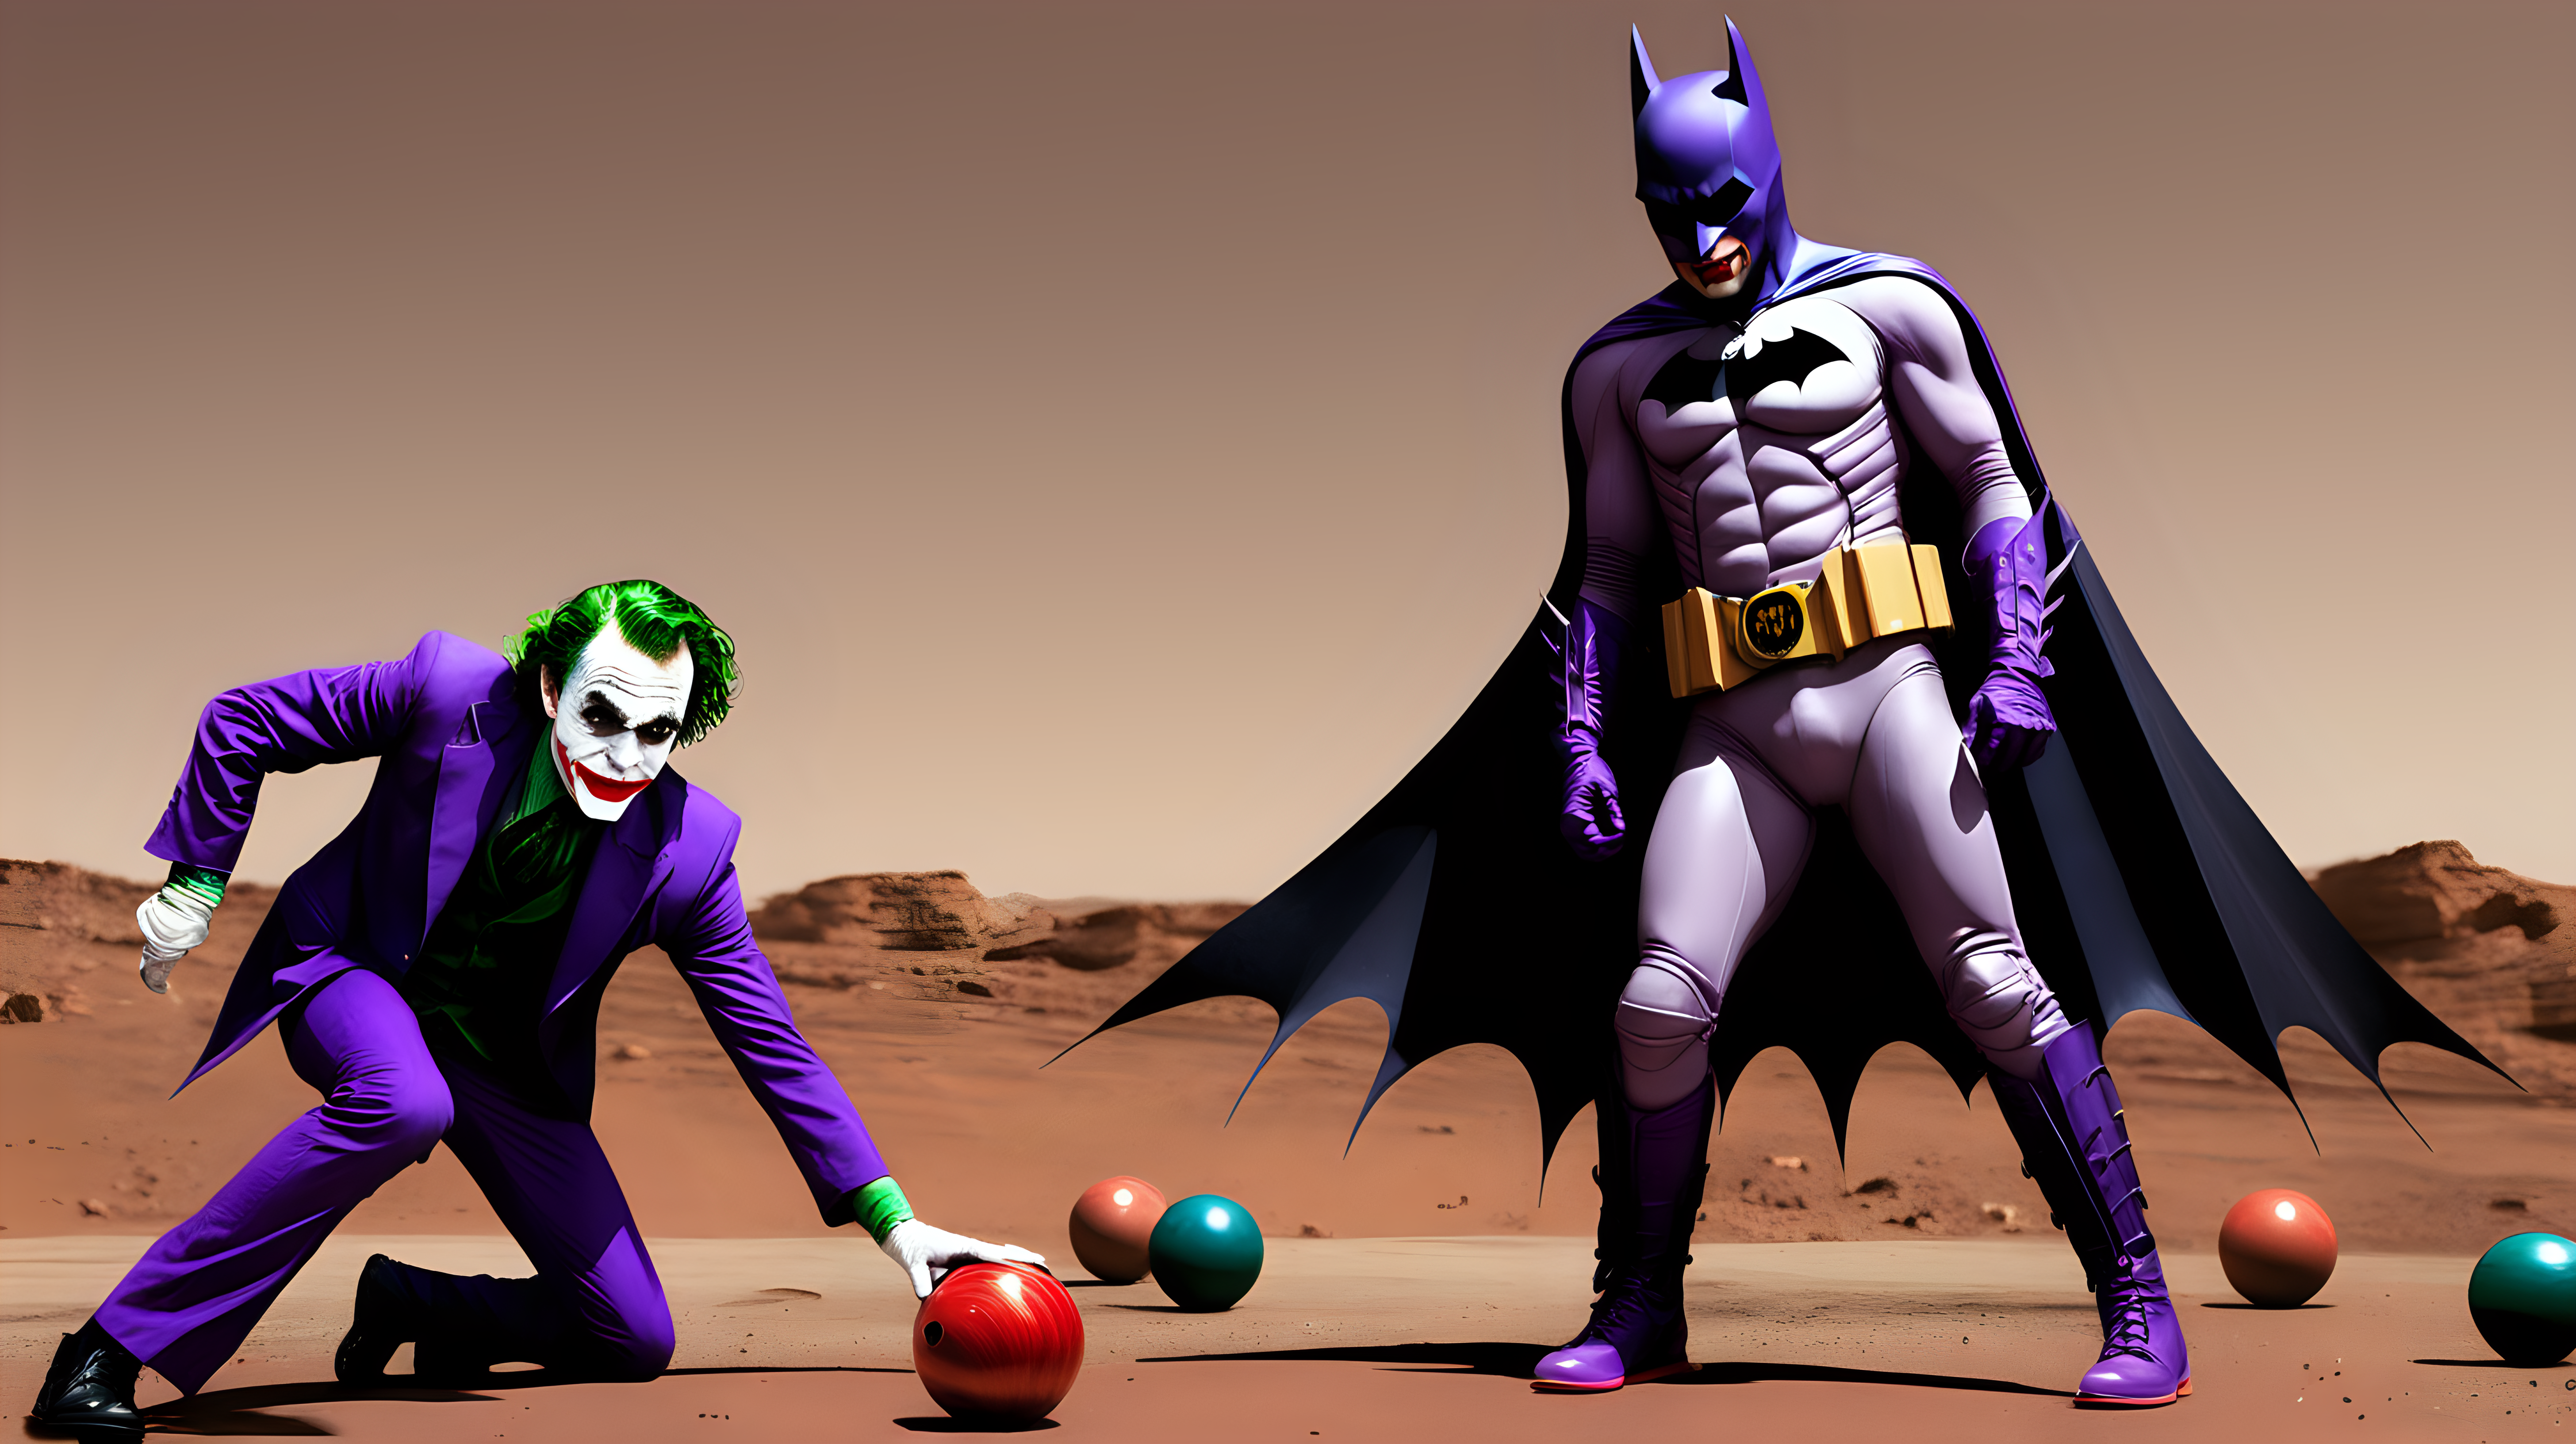 Batman the Joker bowling on Mars